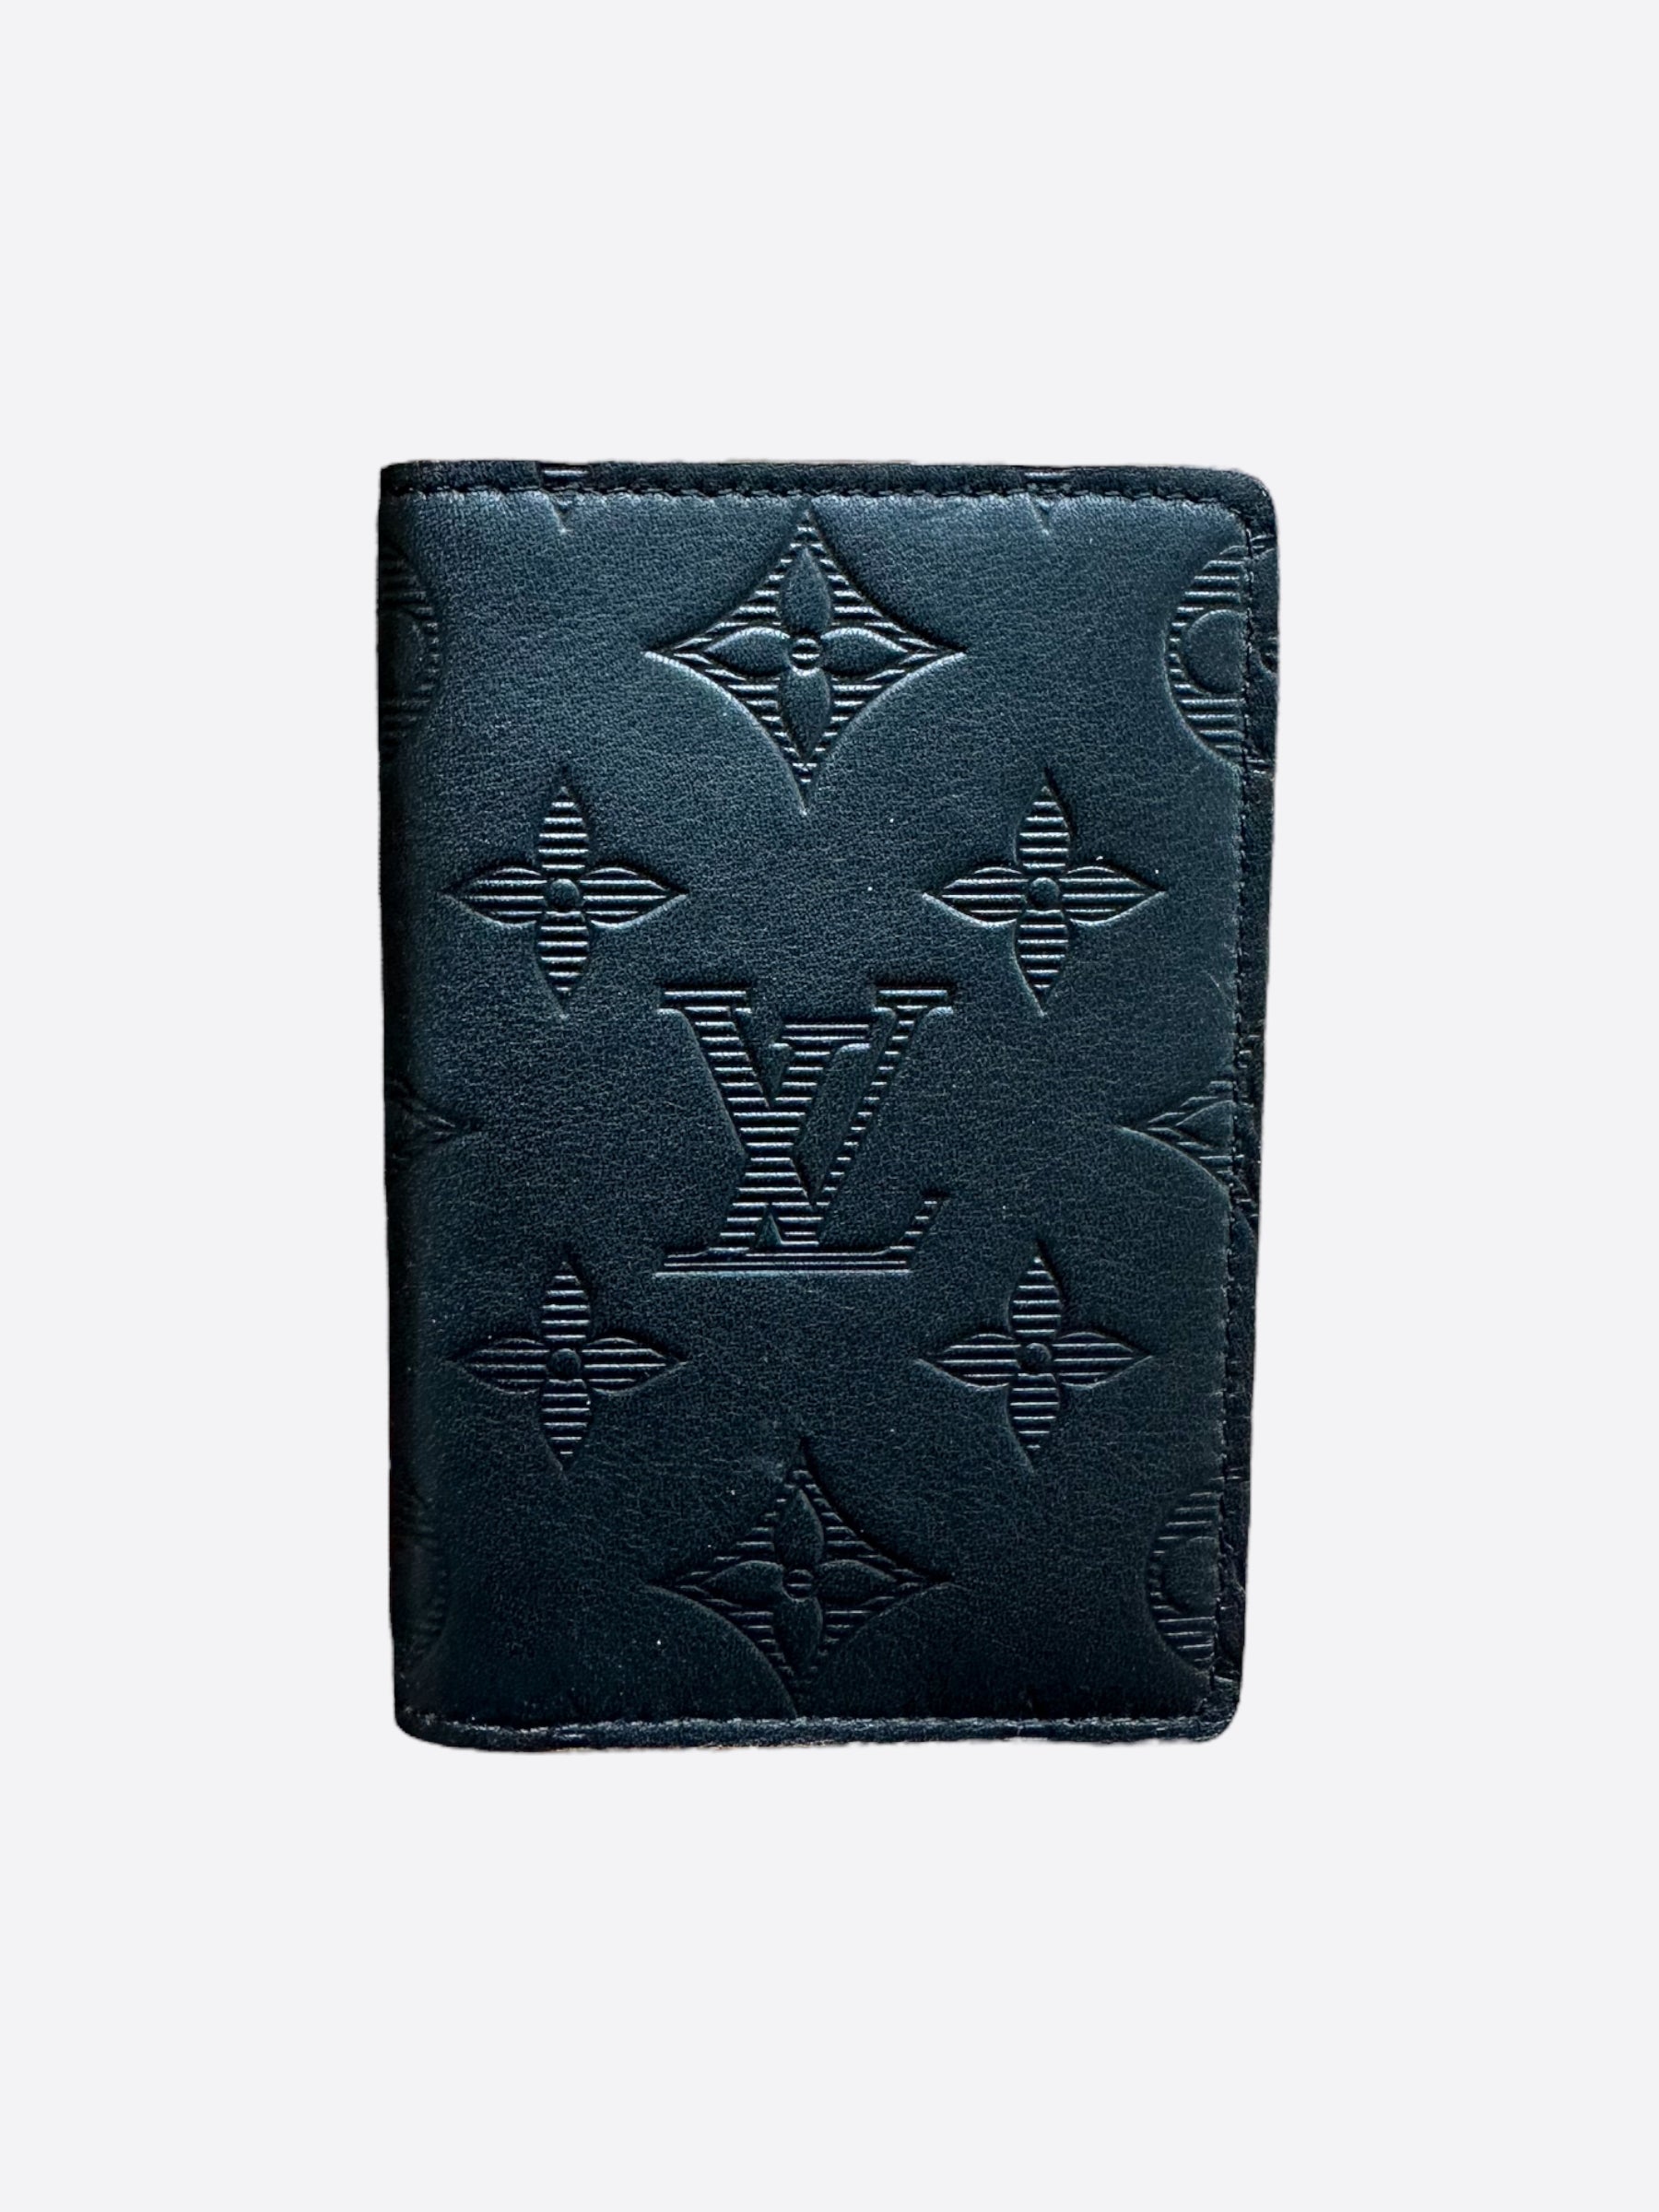 Louis Vuitton Black Shadow Monogram Pocket Organizer